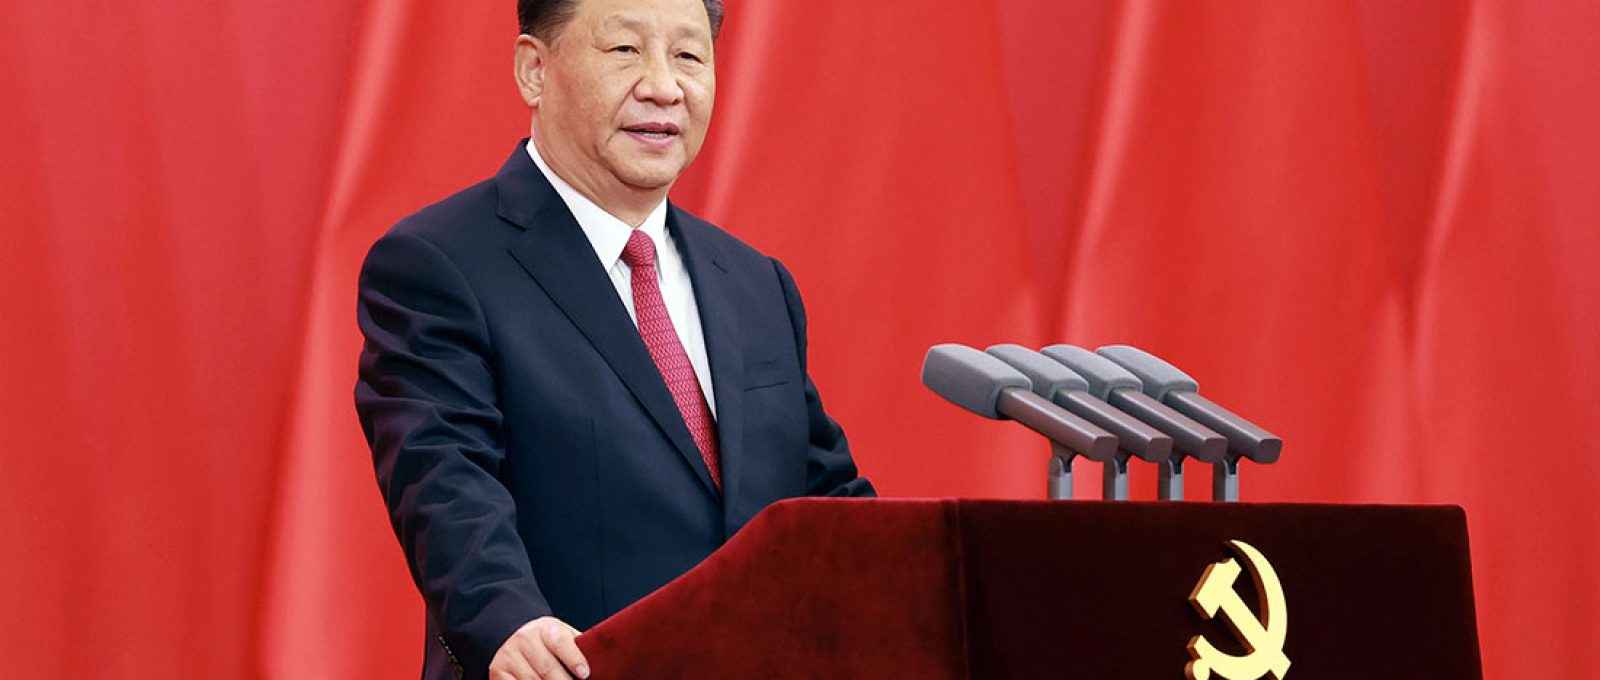 O presidente da República Popular da China, Xi Jinping (Ding Lin/Xinhua/Getty Images).